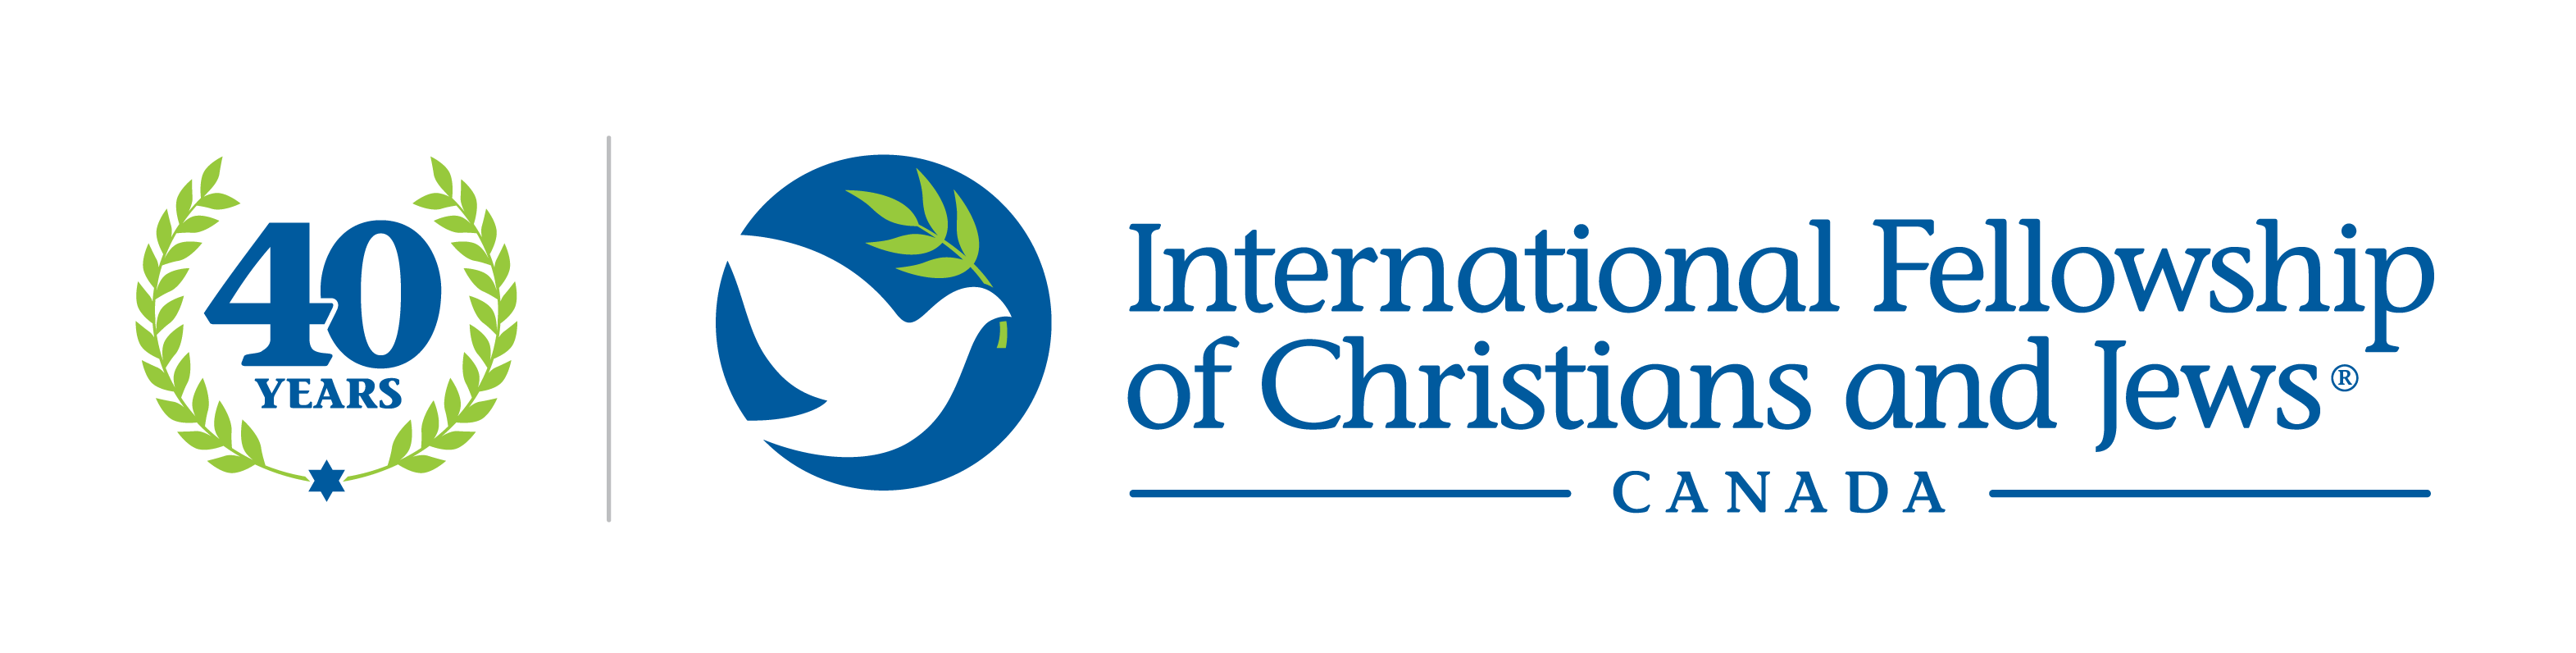 International Fellowship of Christians and Jews - Canada Logo